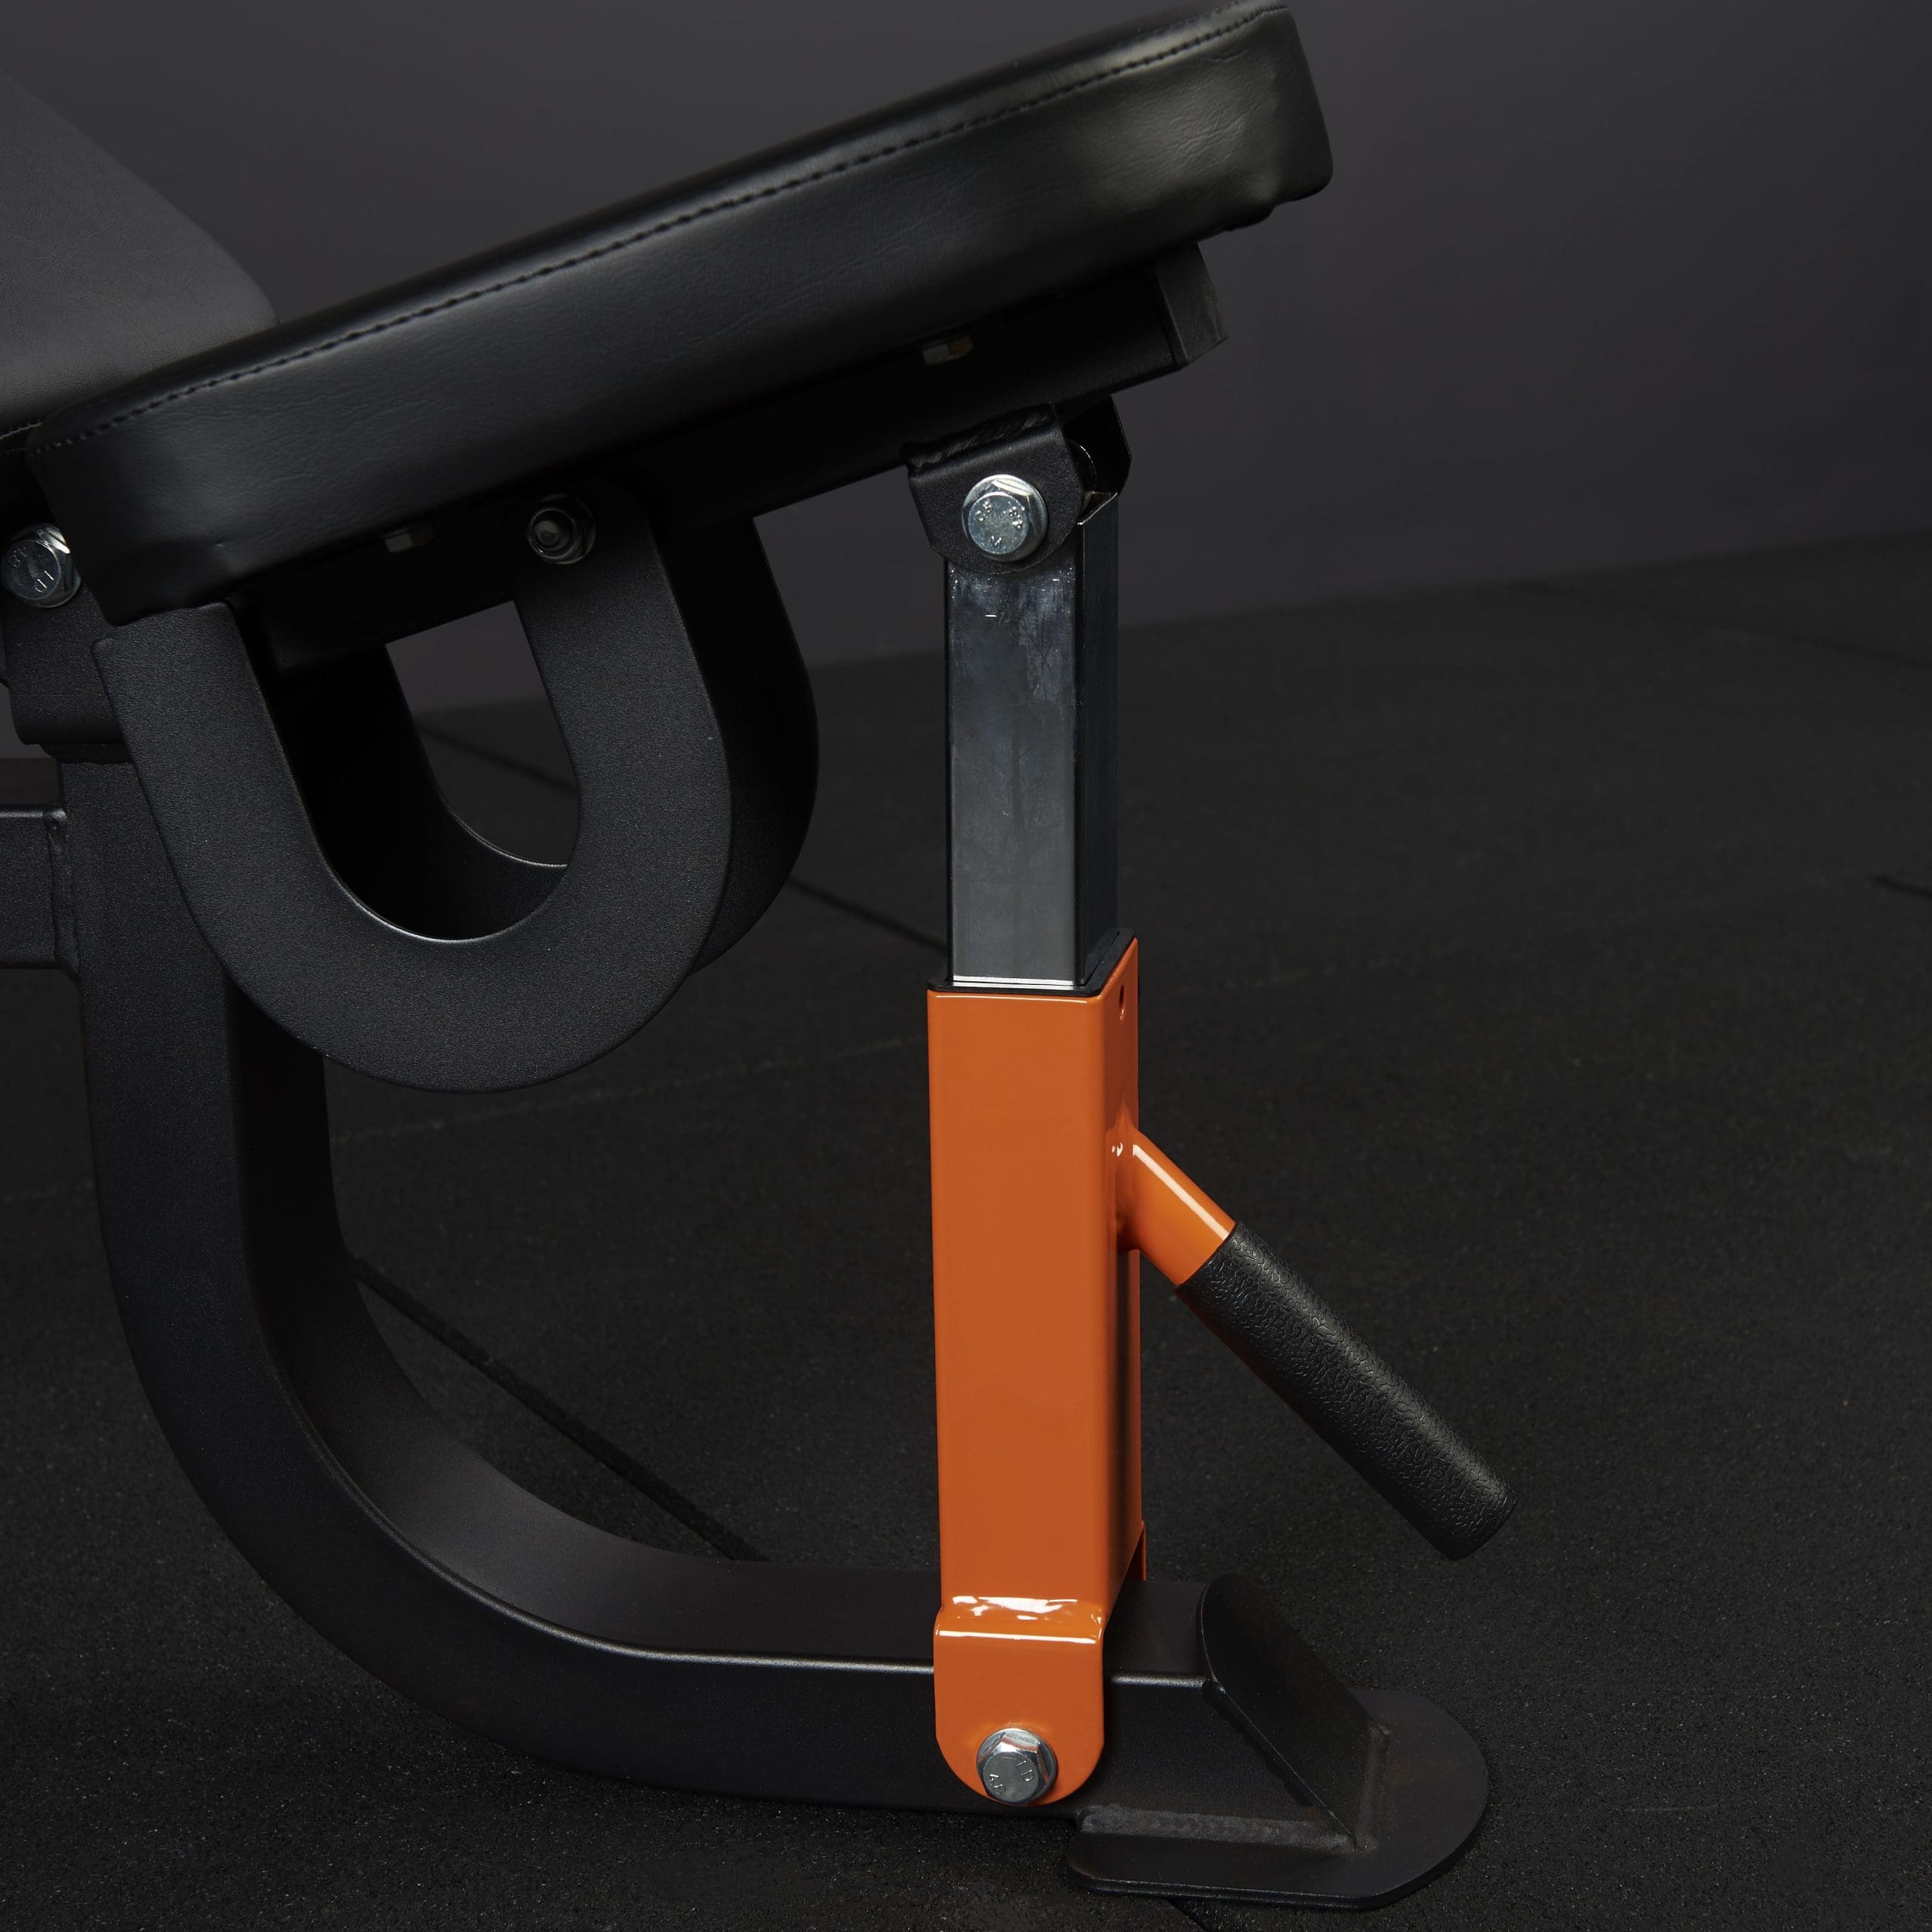 Mirafit M150 Adjustable Weight Bench Base